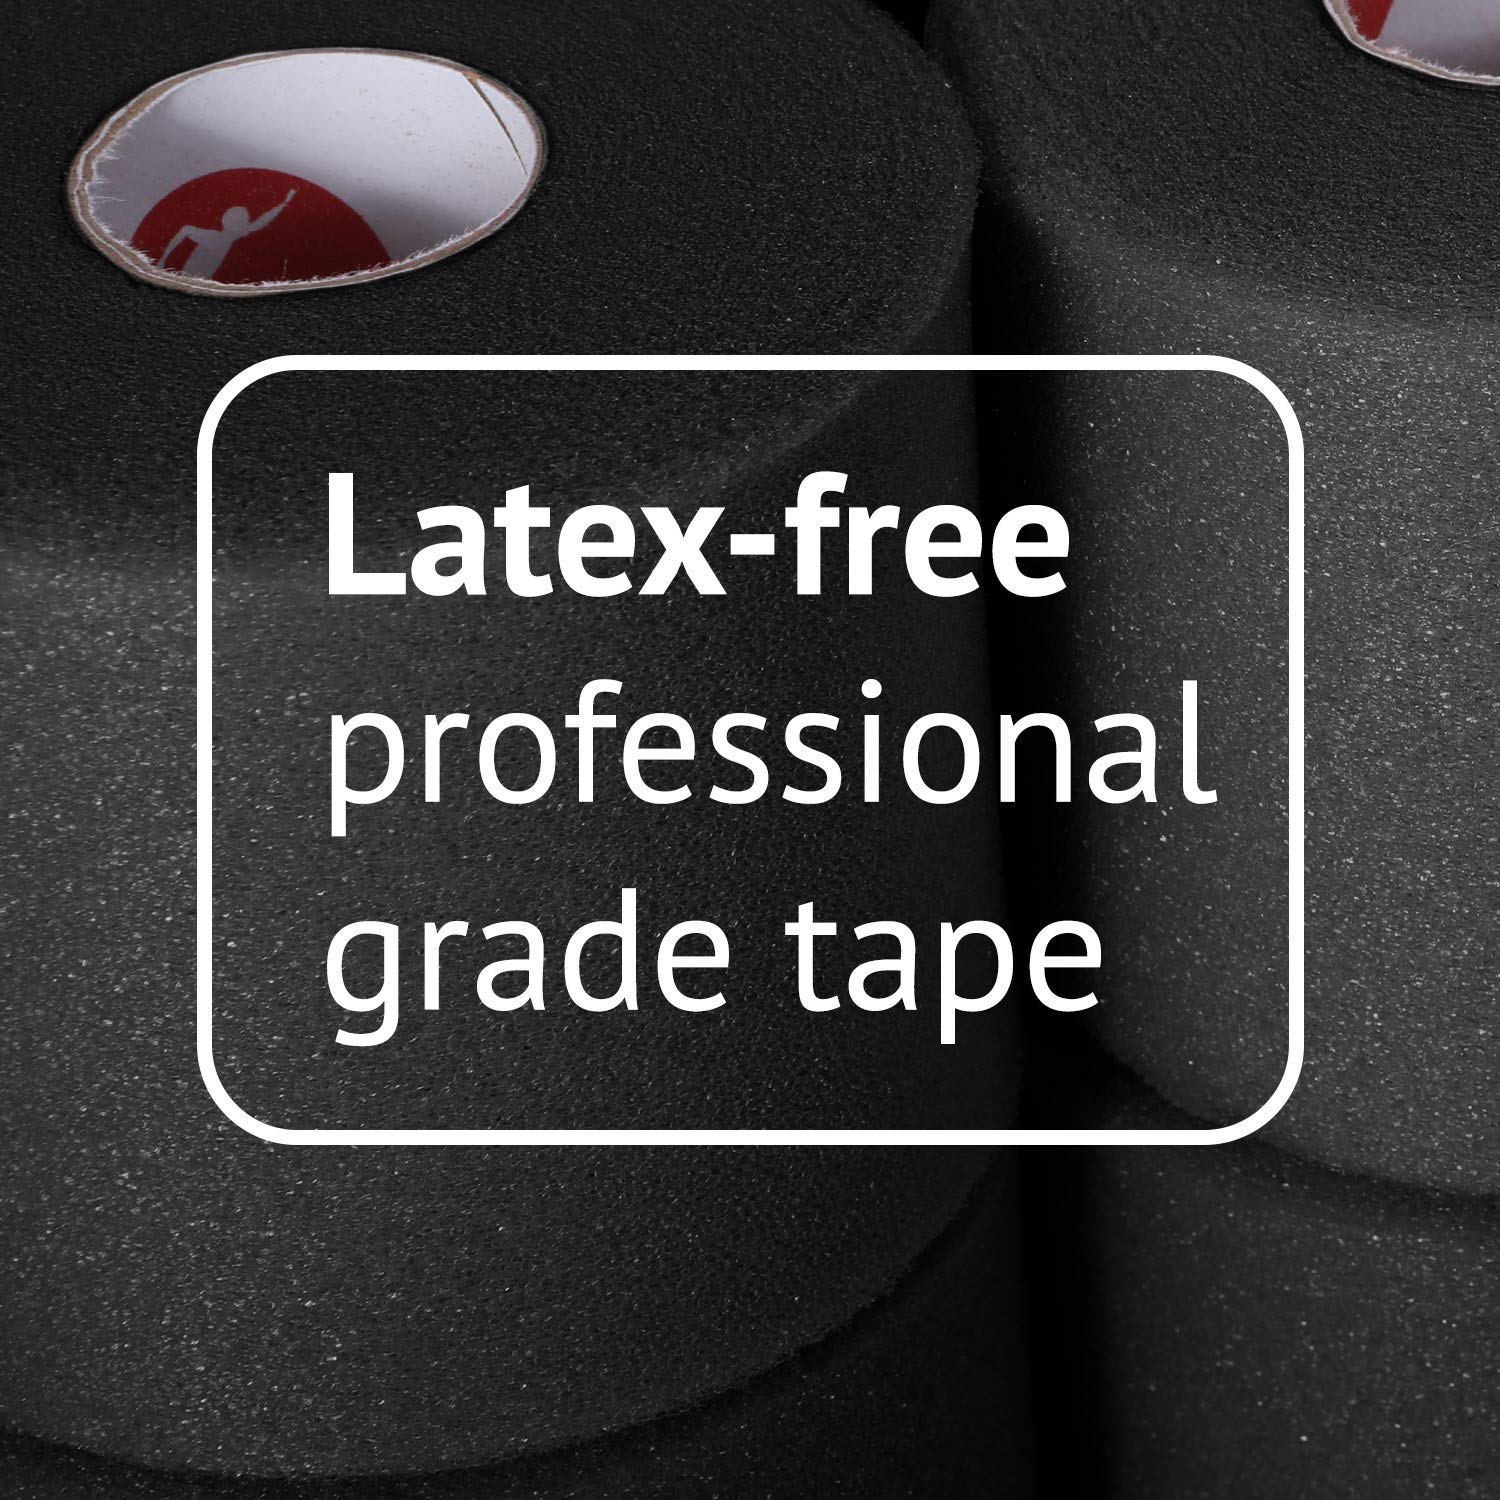 Cramer Tape Underwrap, Bulk Case of 48 Rolls of PreWrap for Athletic Taping, Hair Tie, Headband, Patellar Support, Pre-Wrap Athletic Tape Supplies, 2.75